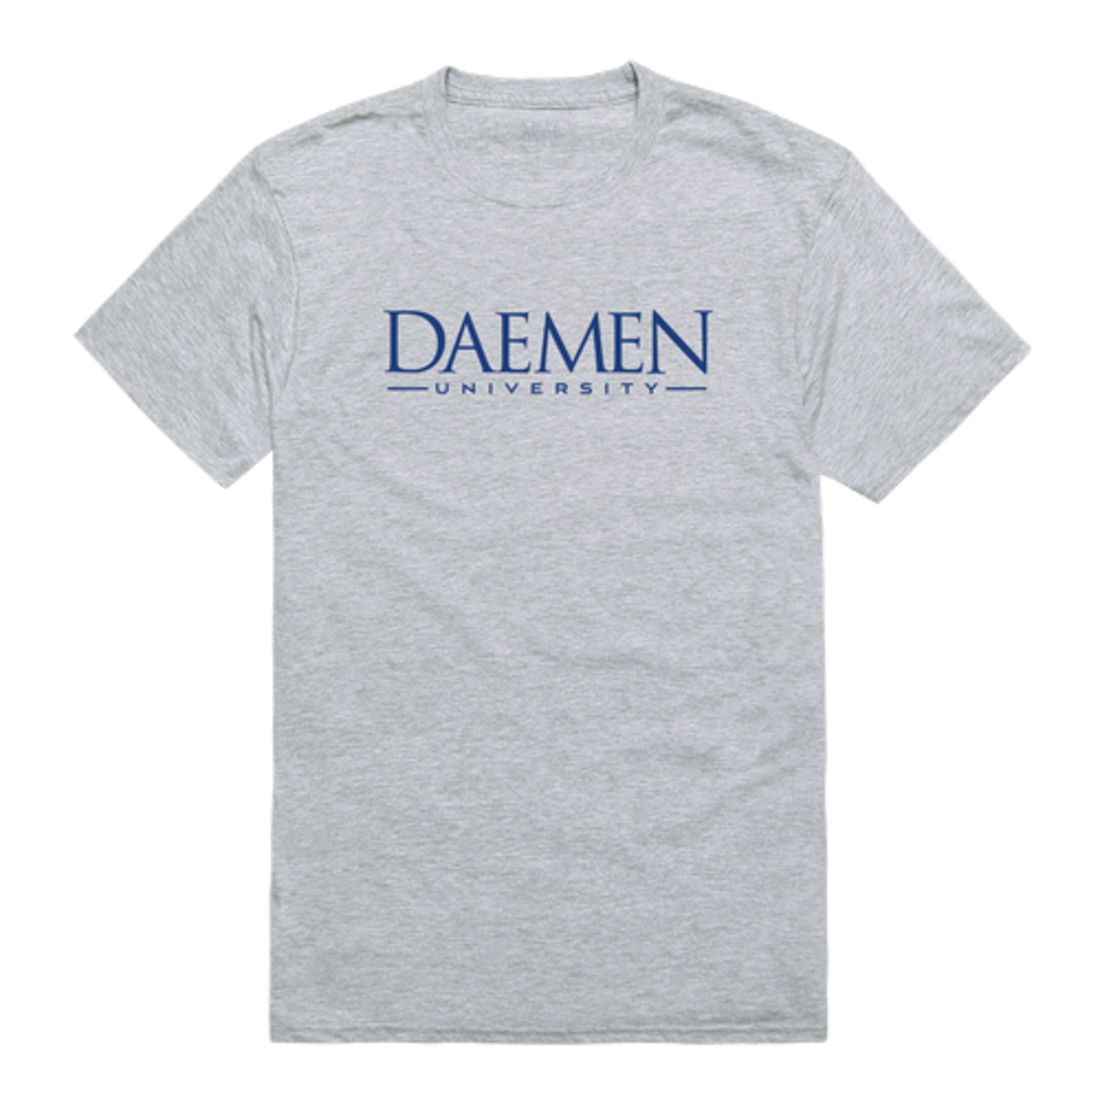 Daemen College Wildcats Institutional T-Shirt